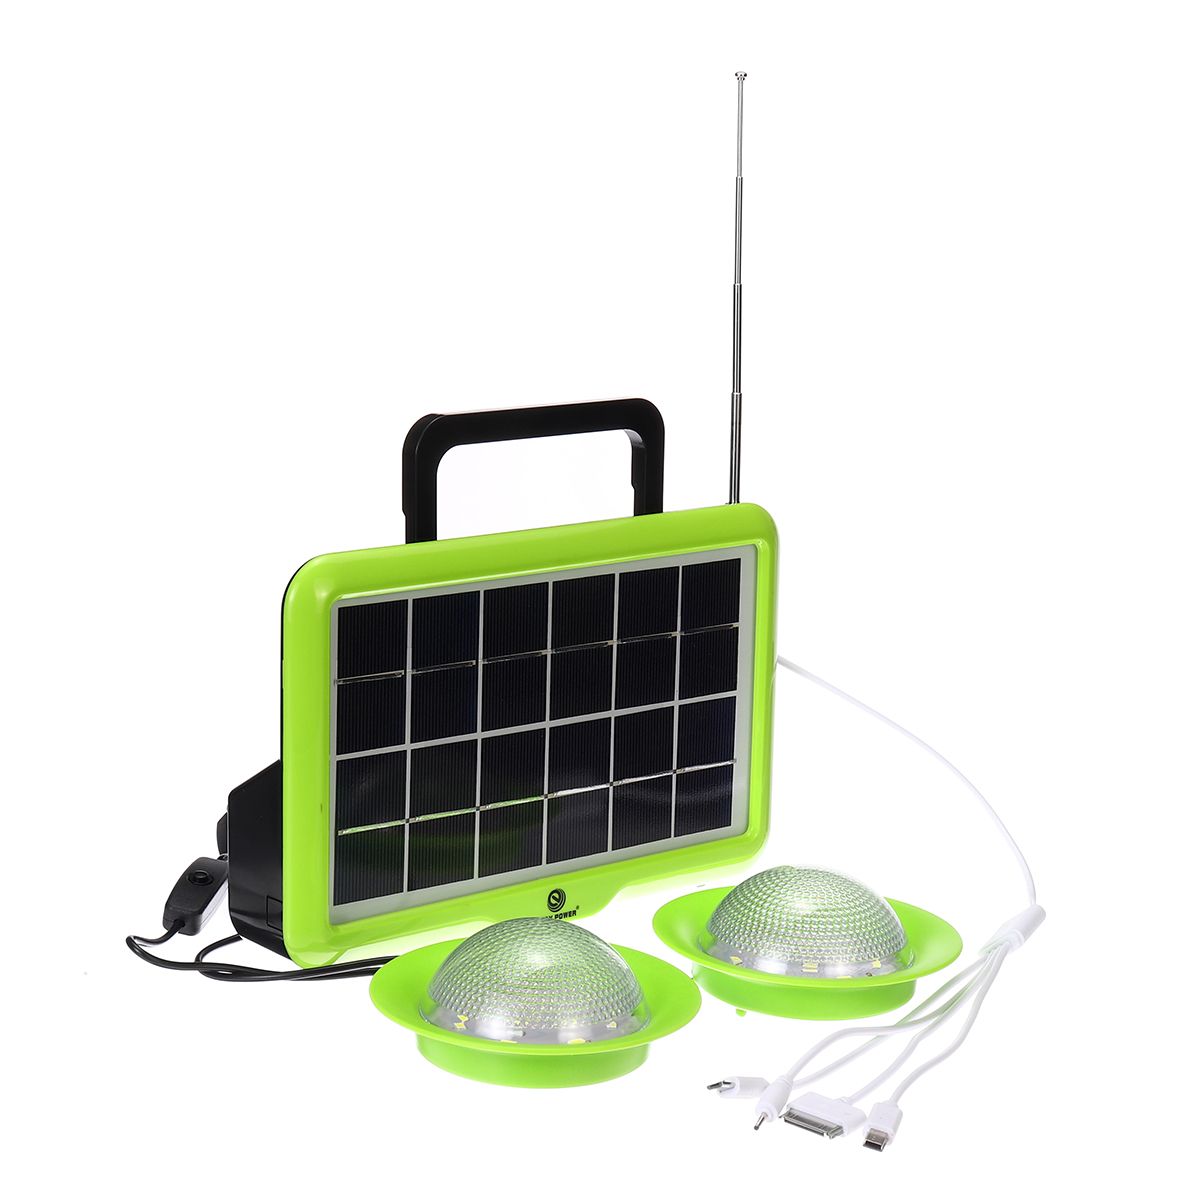 Solar-Lighting-System-Portable-Emergency-Light-RadioLightMusic-Player-Camping-Emergency-Car-Repairin-1608488